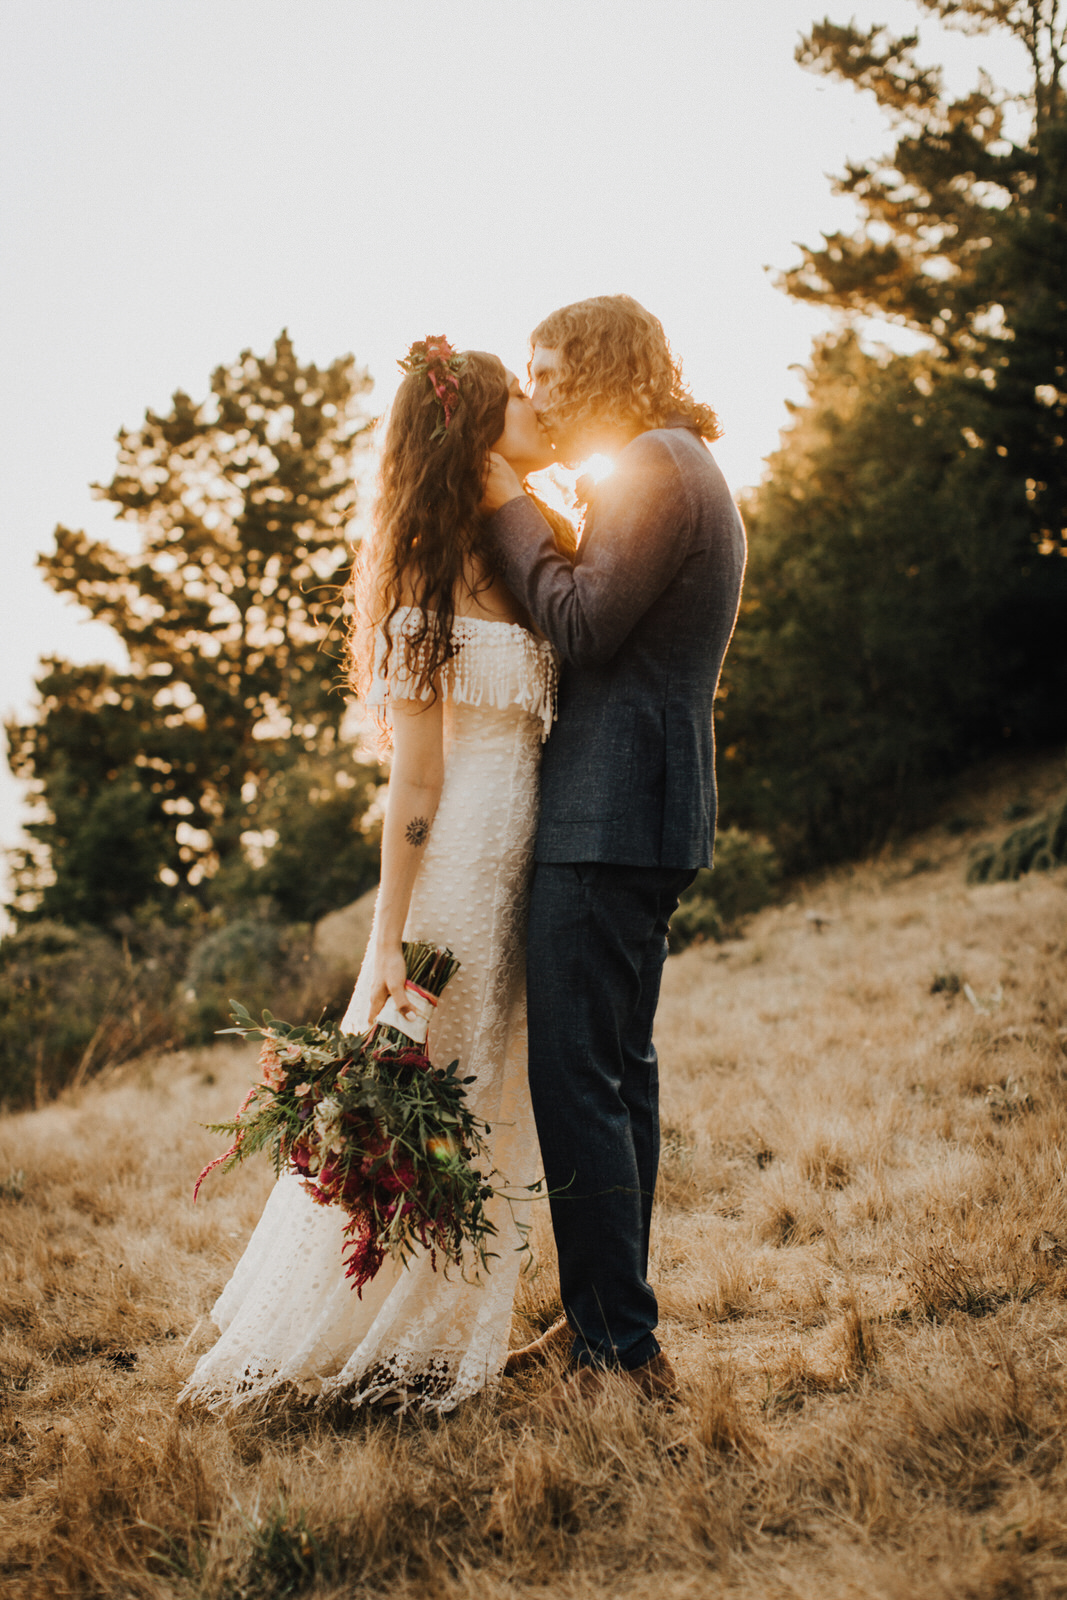 Wedding couple kissing at sunset